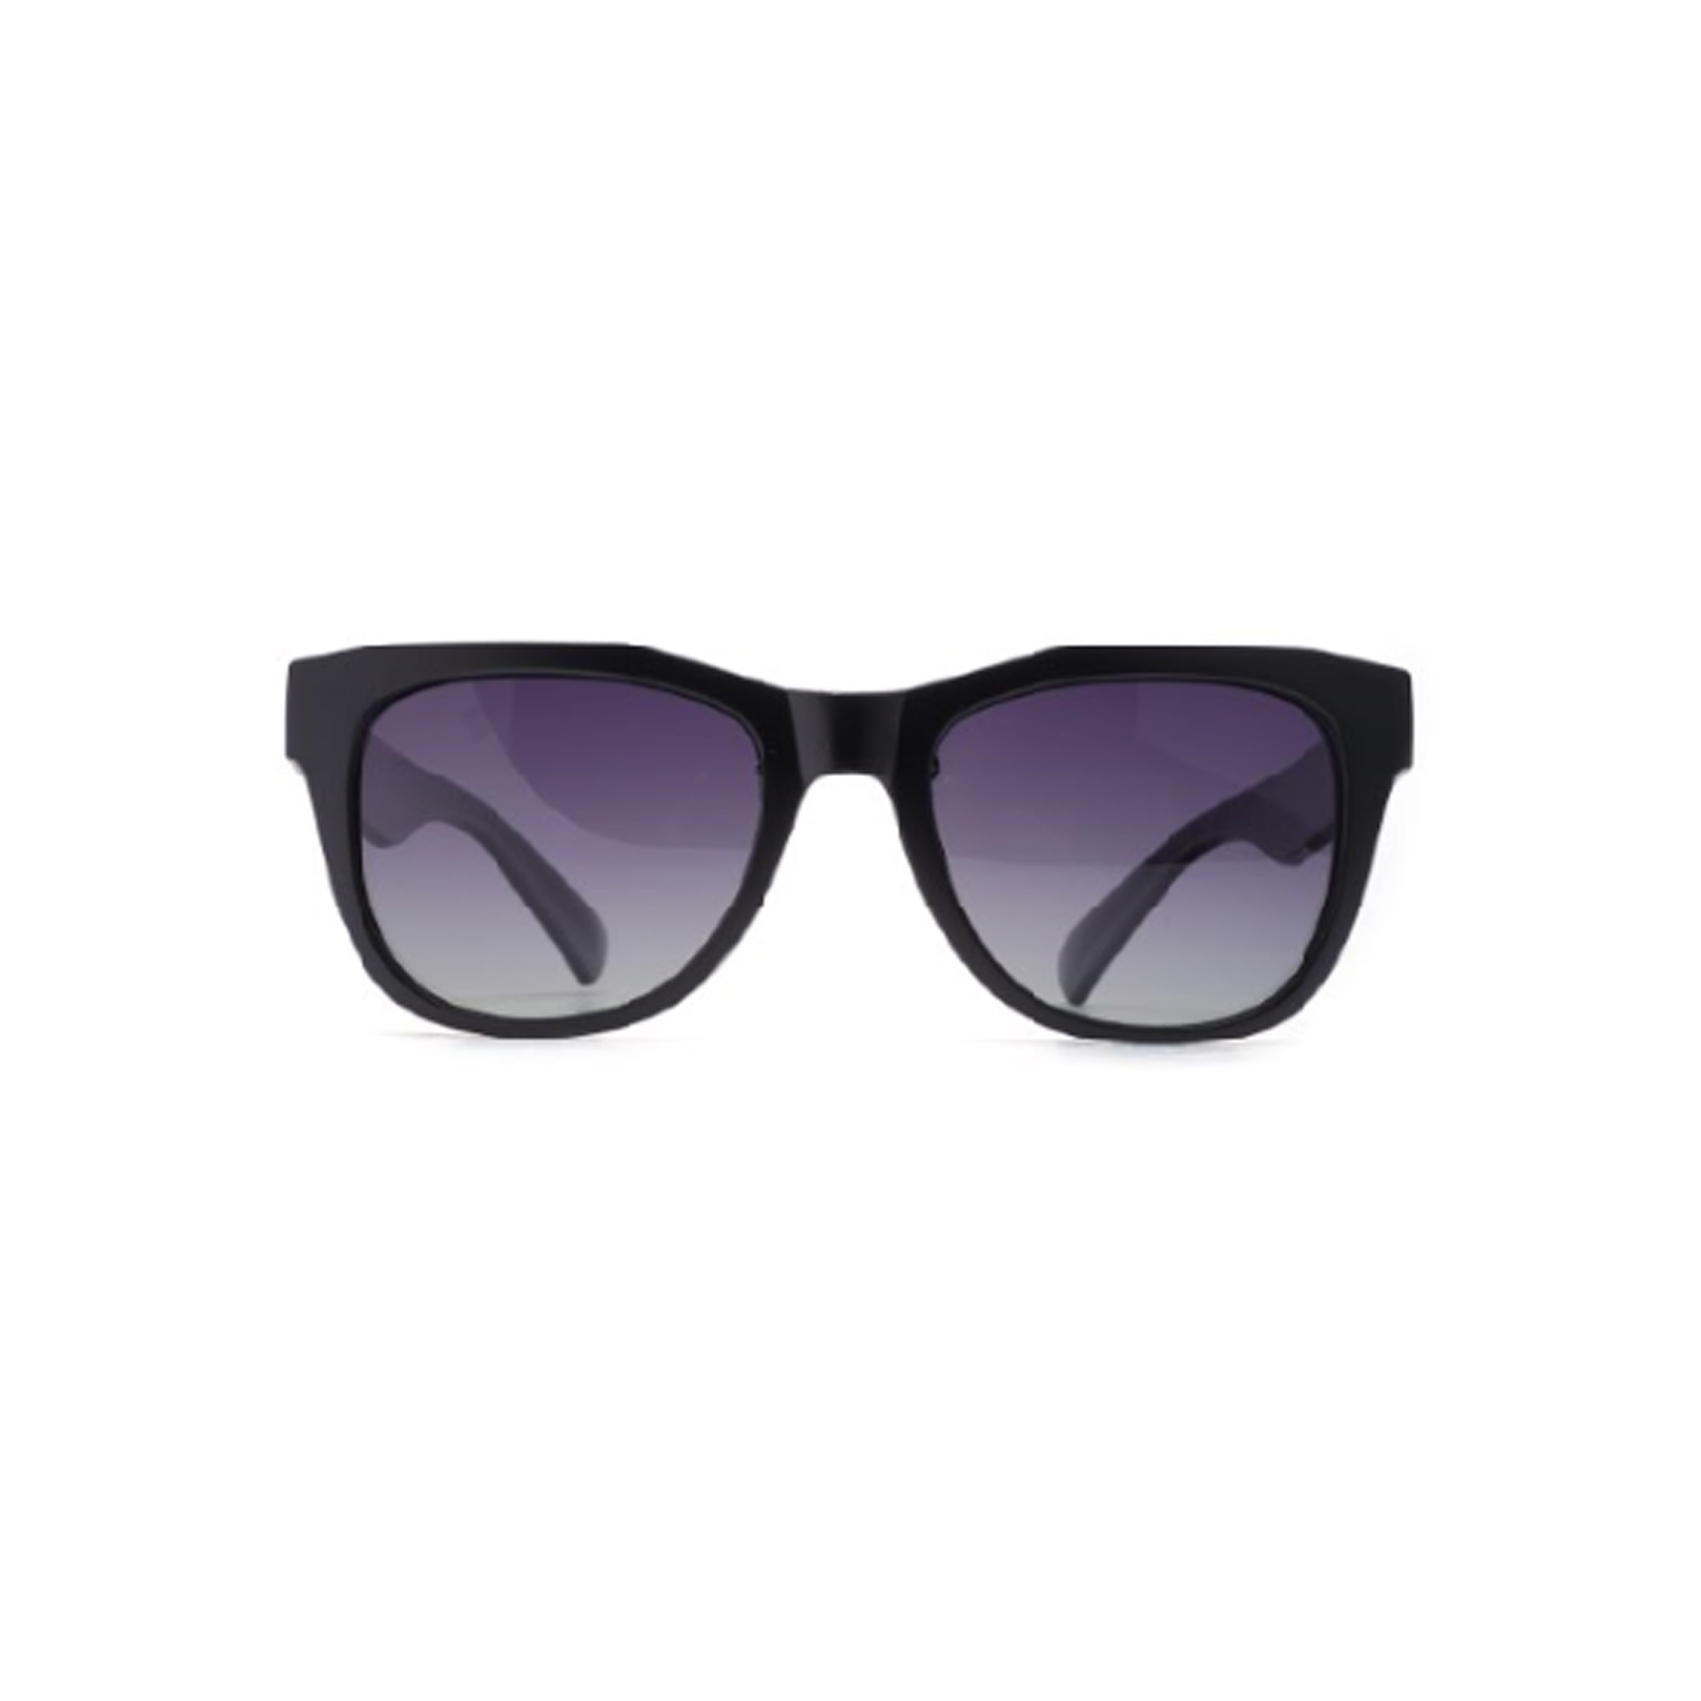 Unisex Retro Round Best Mens Round Sunglasses Wholesale Fashion Sunglasses by the Dozen